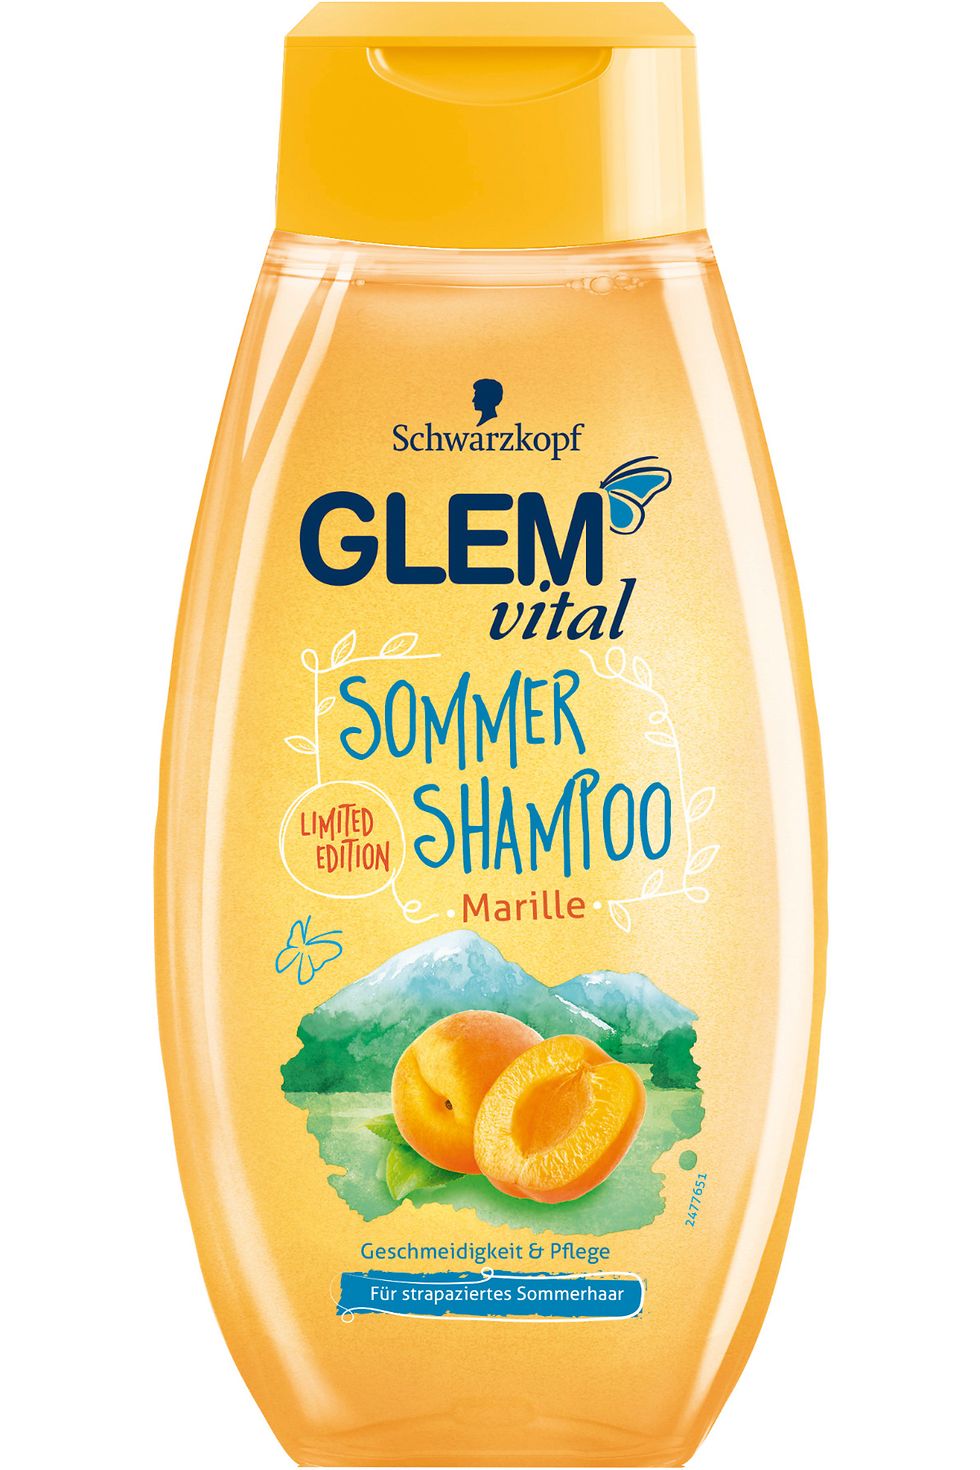 Glem vital Sommer Limited Editon Marille Shampoo